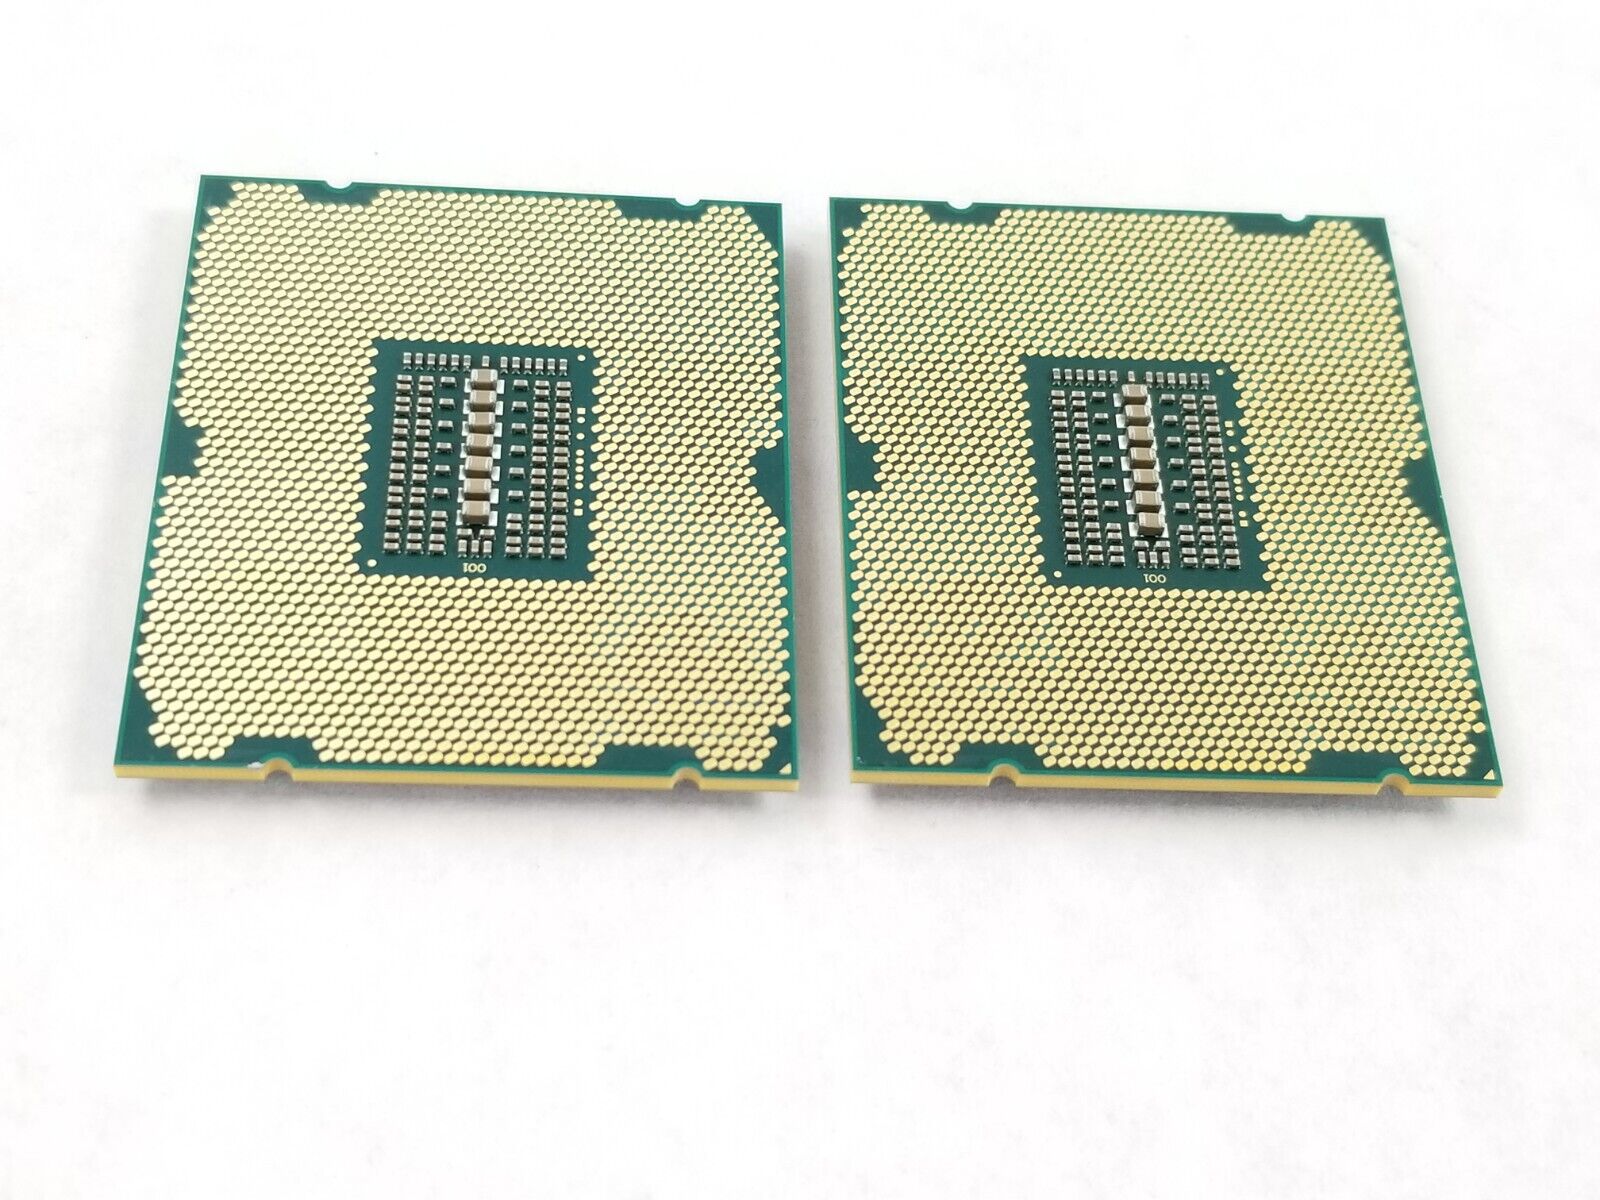 Matching Pair Intel Xeon E5-2680 V2 SR1A6 2.8GHz 10-Core LGA2011 CPU Processor